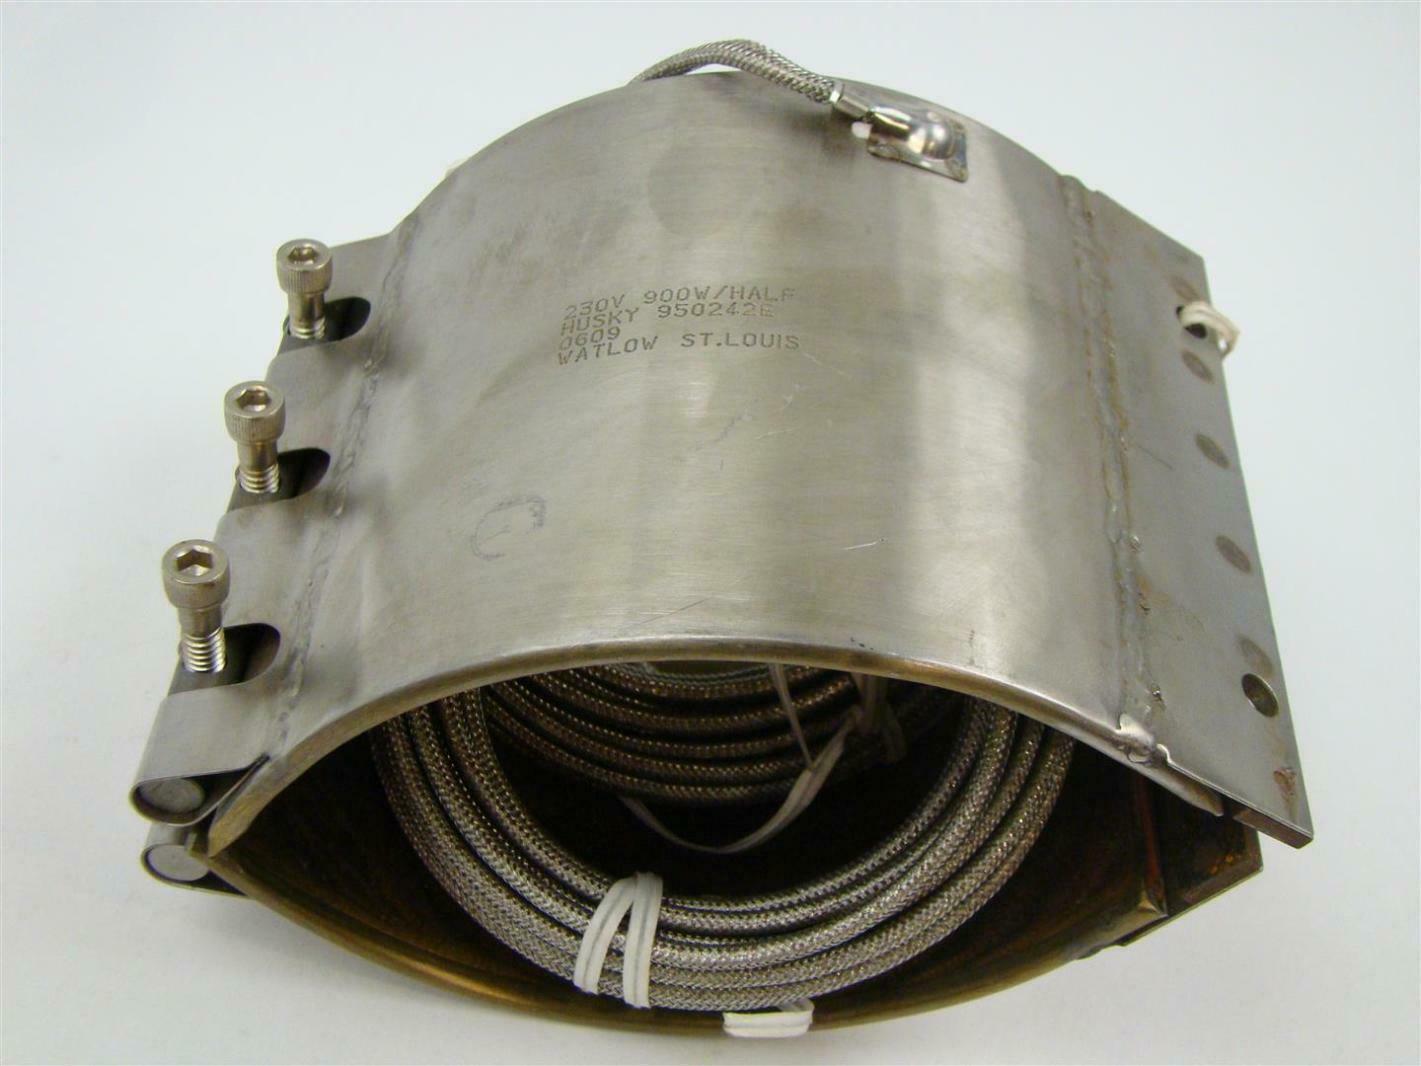 Watlow Hysky 900w Band Heater (230v, 900W/Half), 950242E